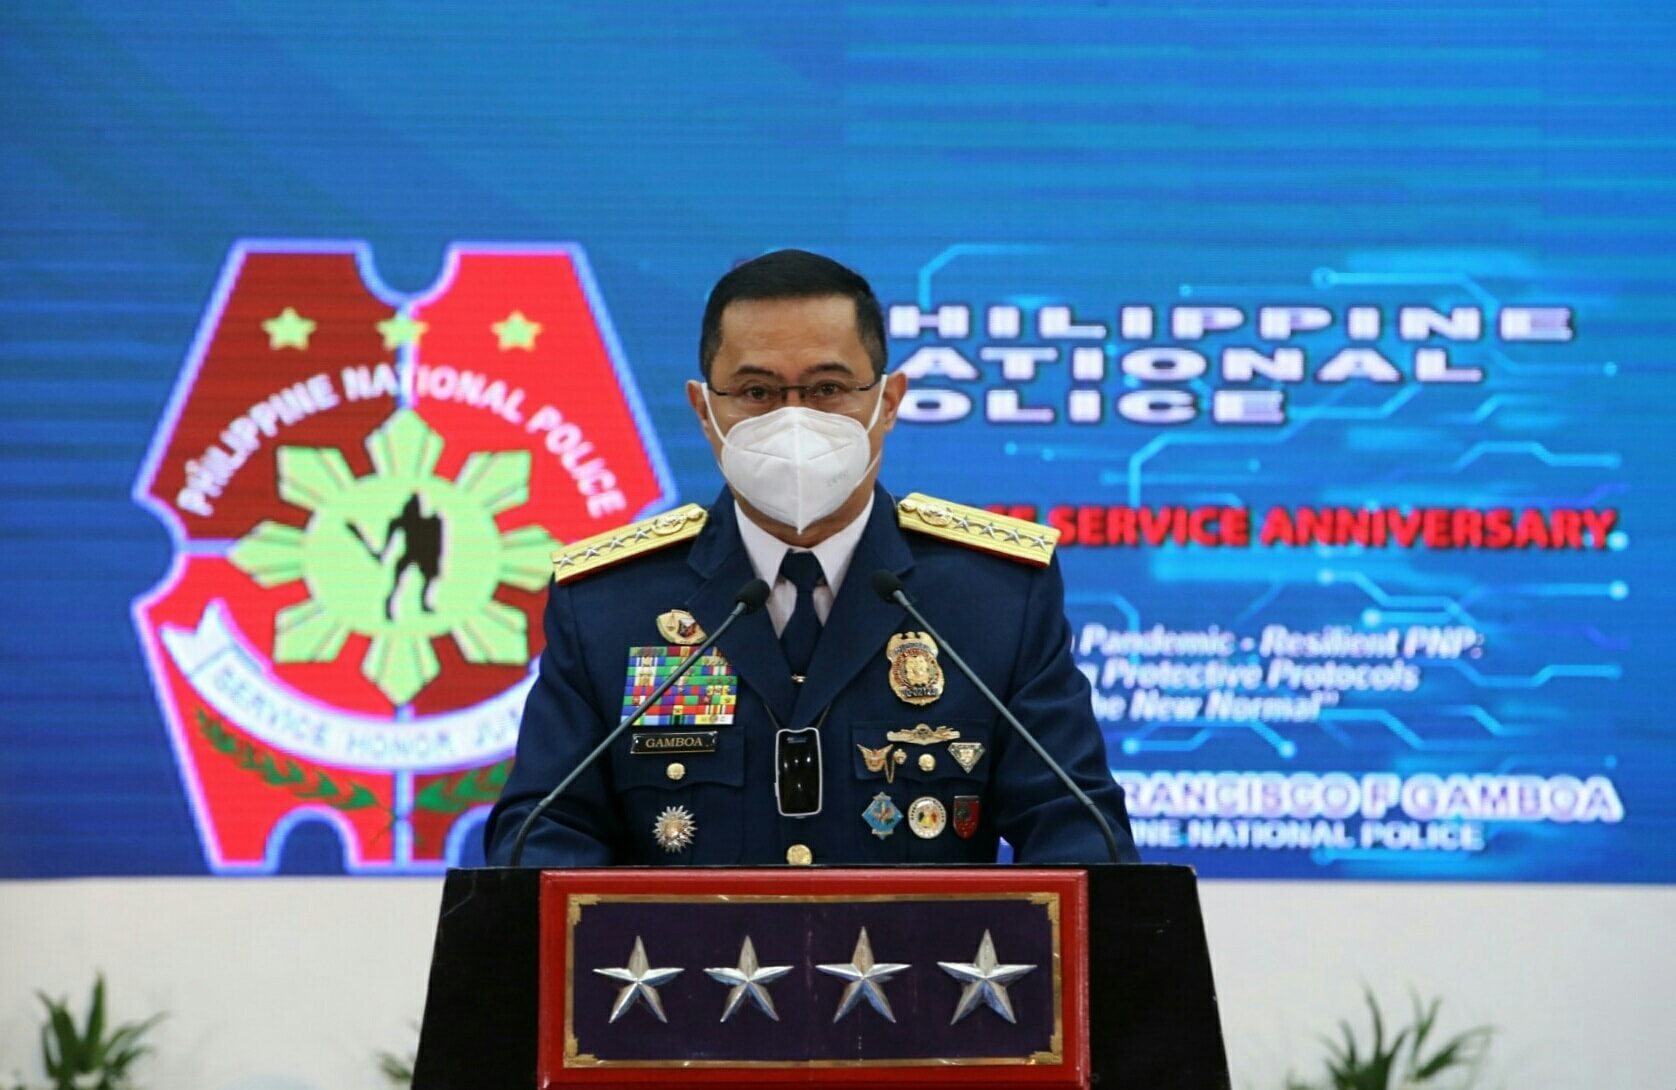 PNP Chief Archie Gamboa <i></noscript>Photo: Philippine National Police / FB</i>